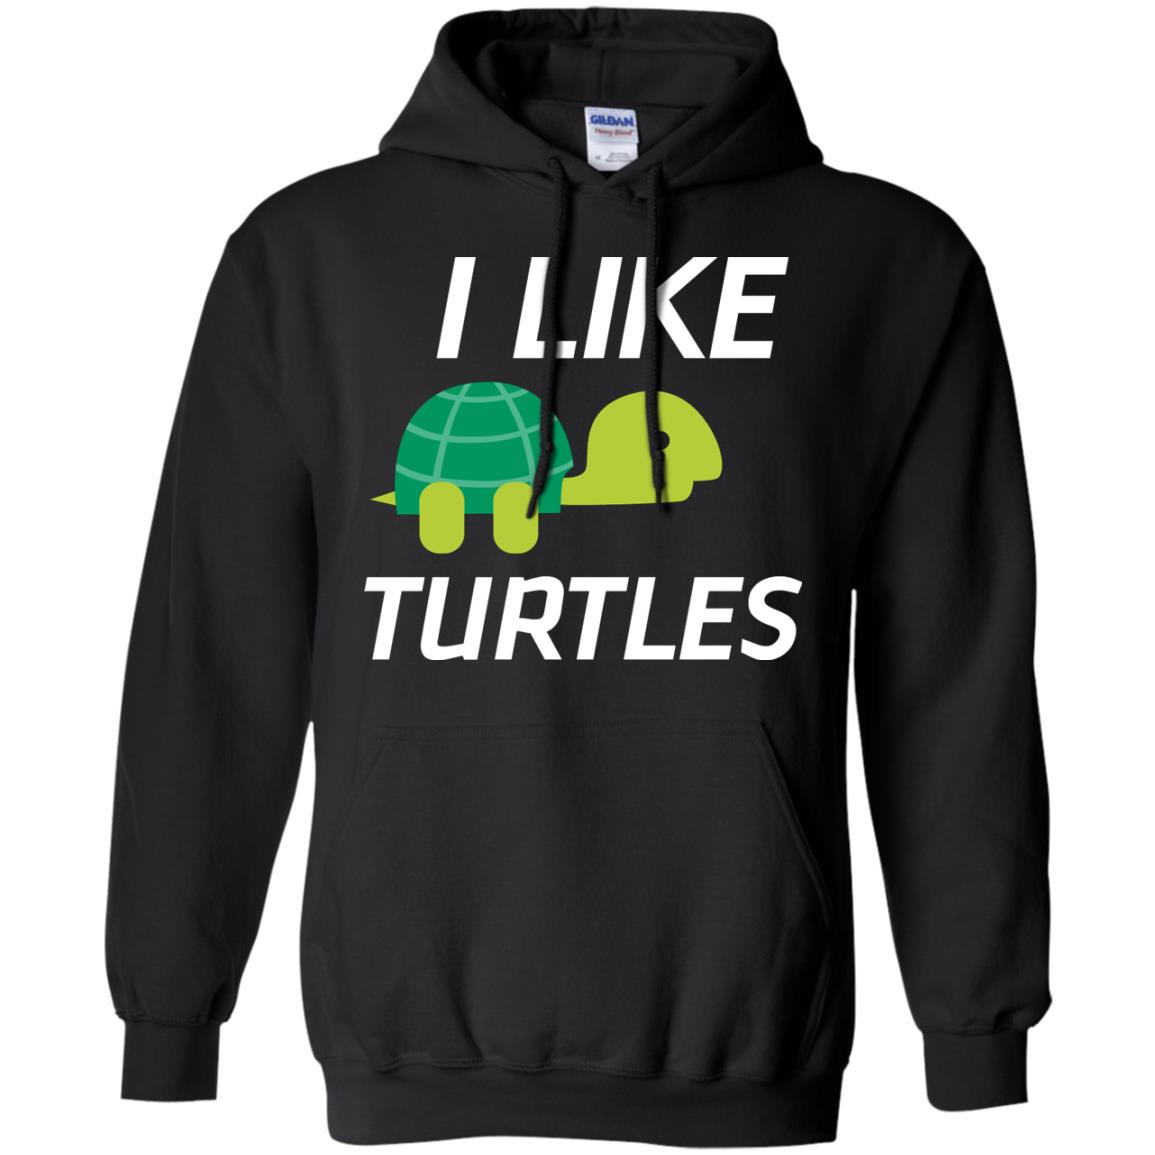 I Like Turtles Gift Shirt For Turtles Lover